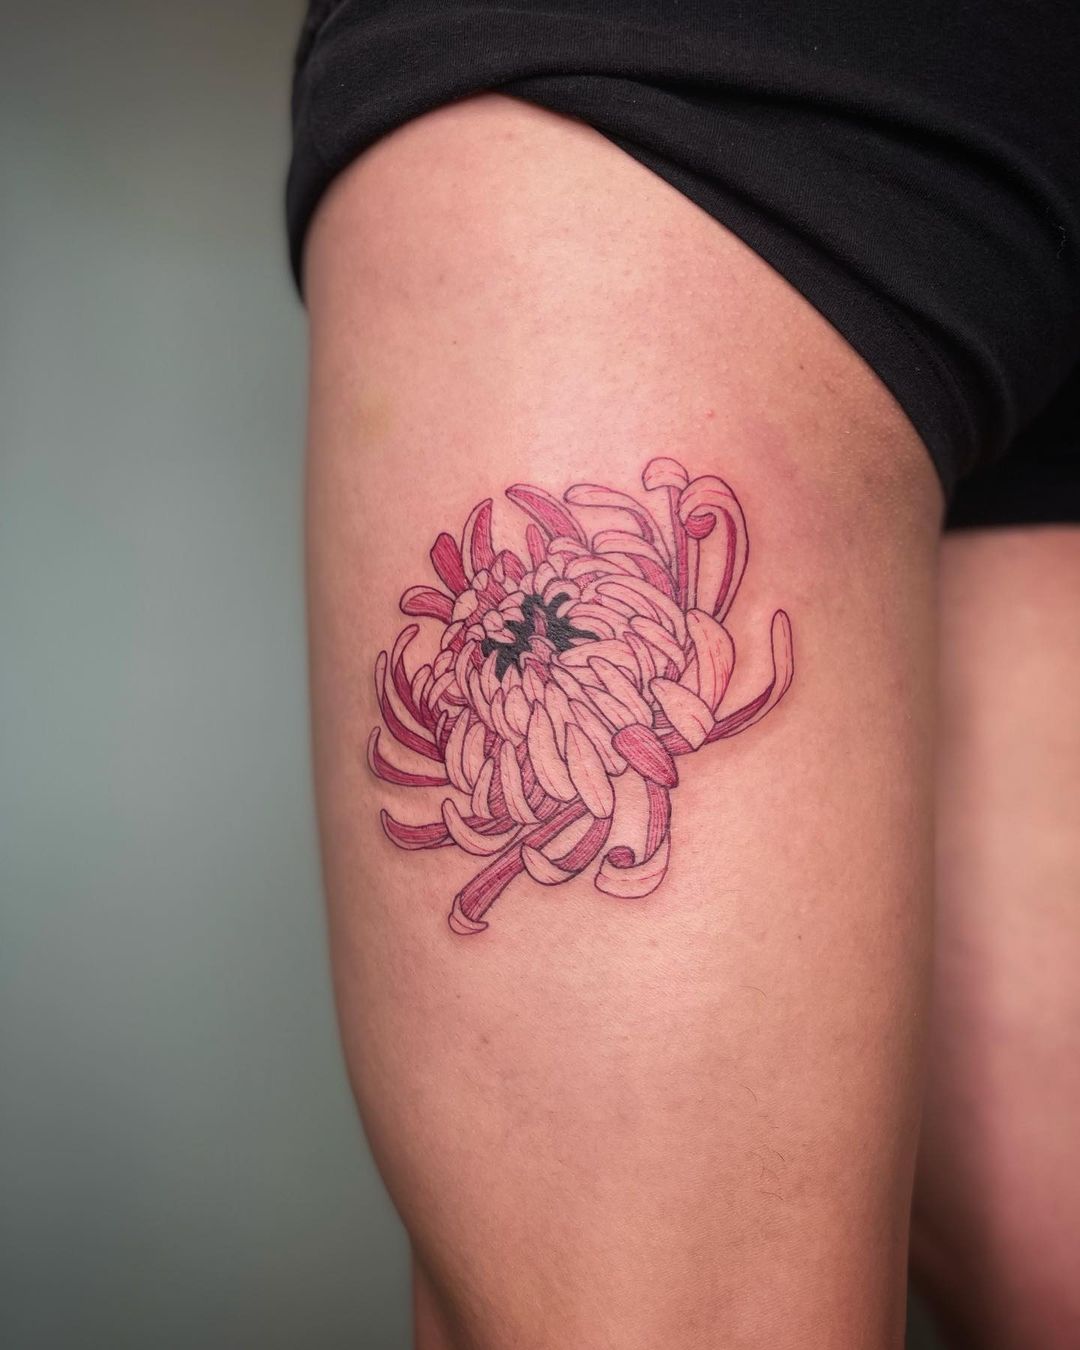 Tattoo uploaded by Cristian Liambo • #chrysanthemumtattoo #chrysanthemum  #flower #flowertattoo #blacktattoos #blacktattoo #TraditionalArtists  #Tattoodo • Tattoodo